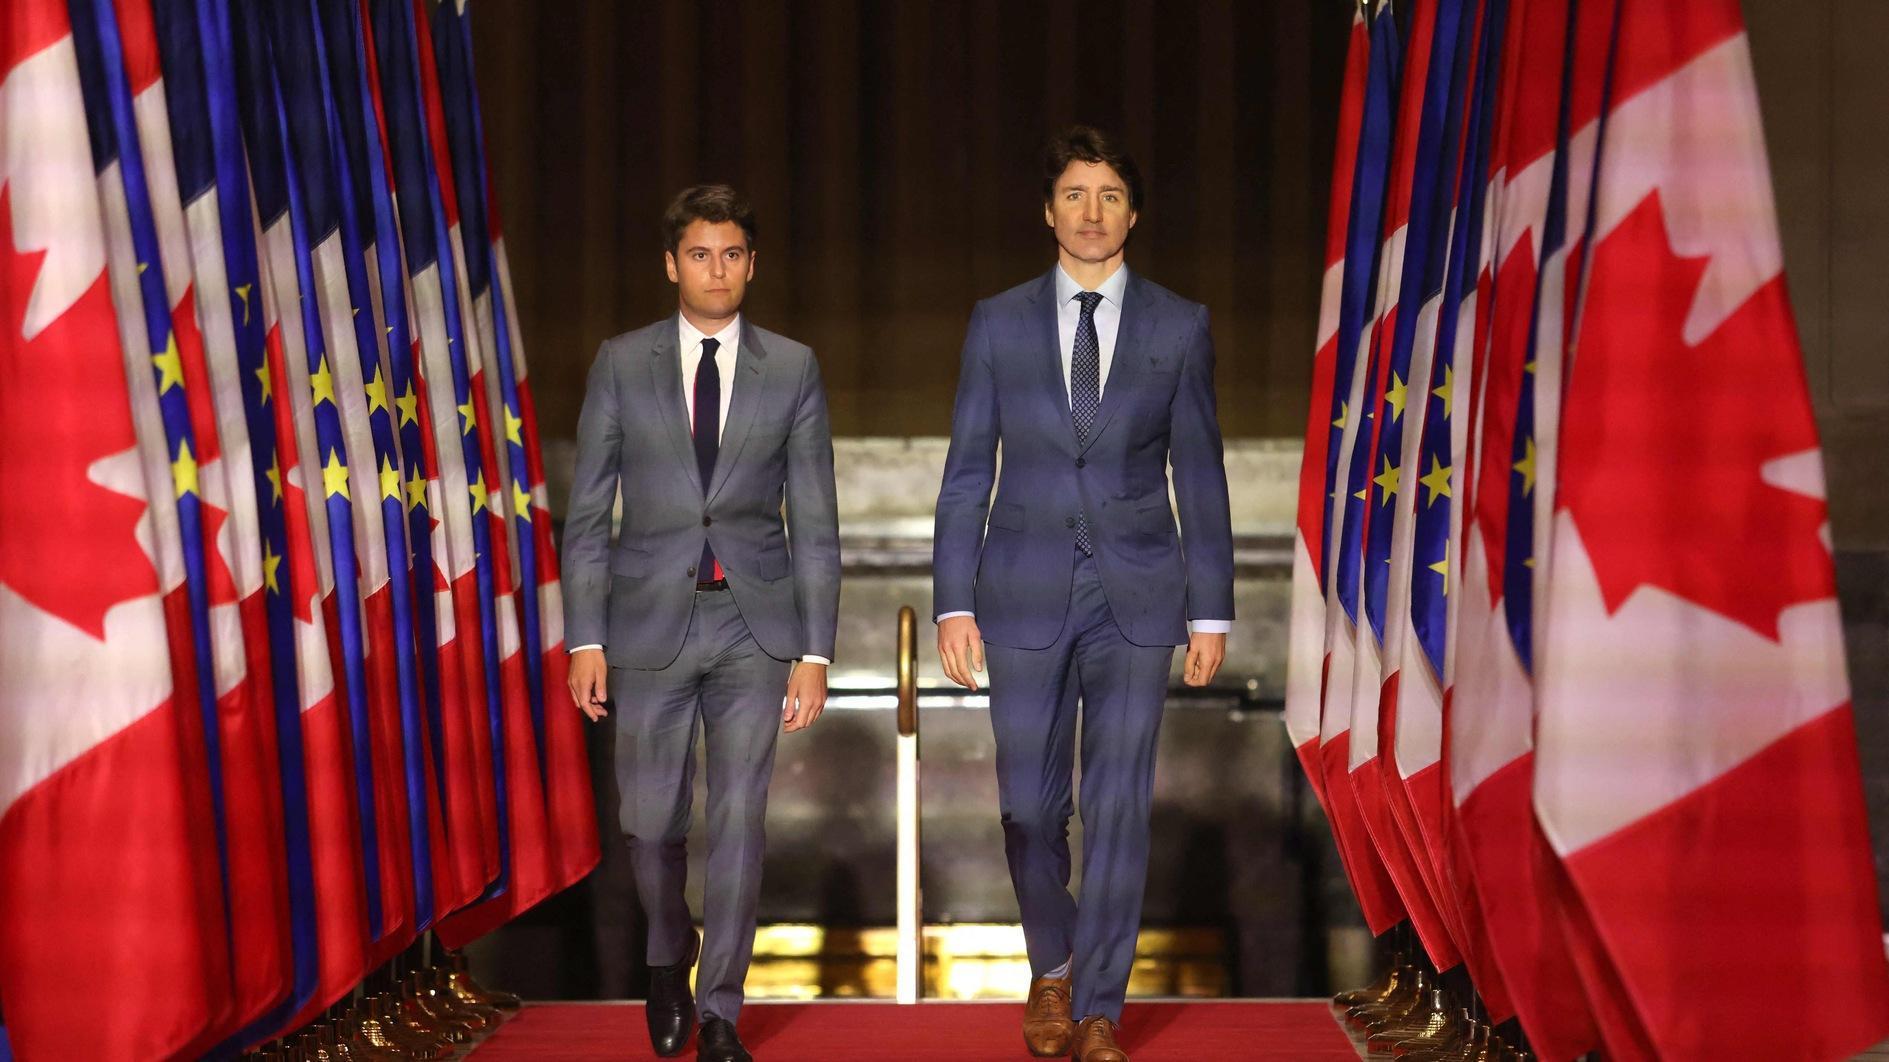 De Franse premier Trudeau verdedigt het handelsverdrag tussen Canada en de EU